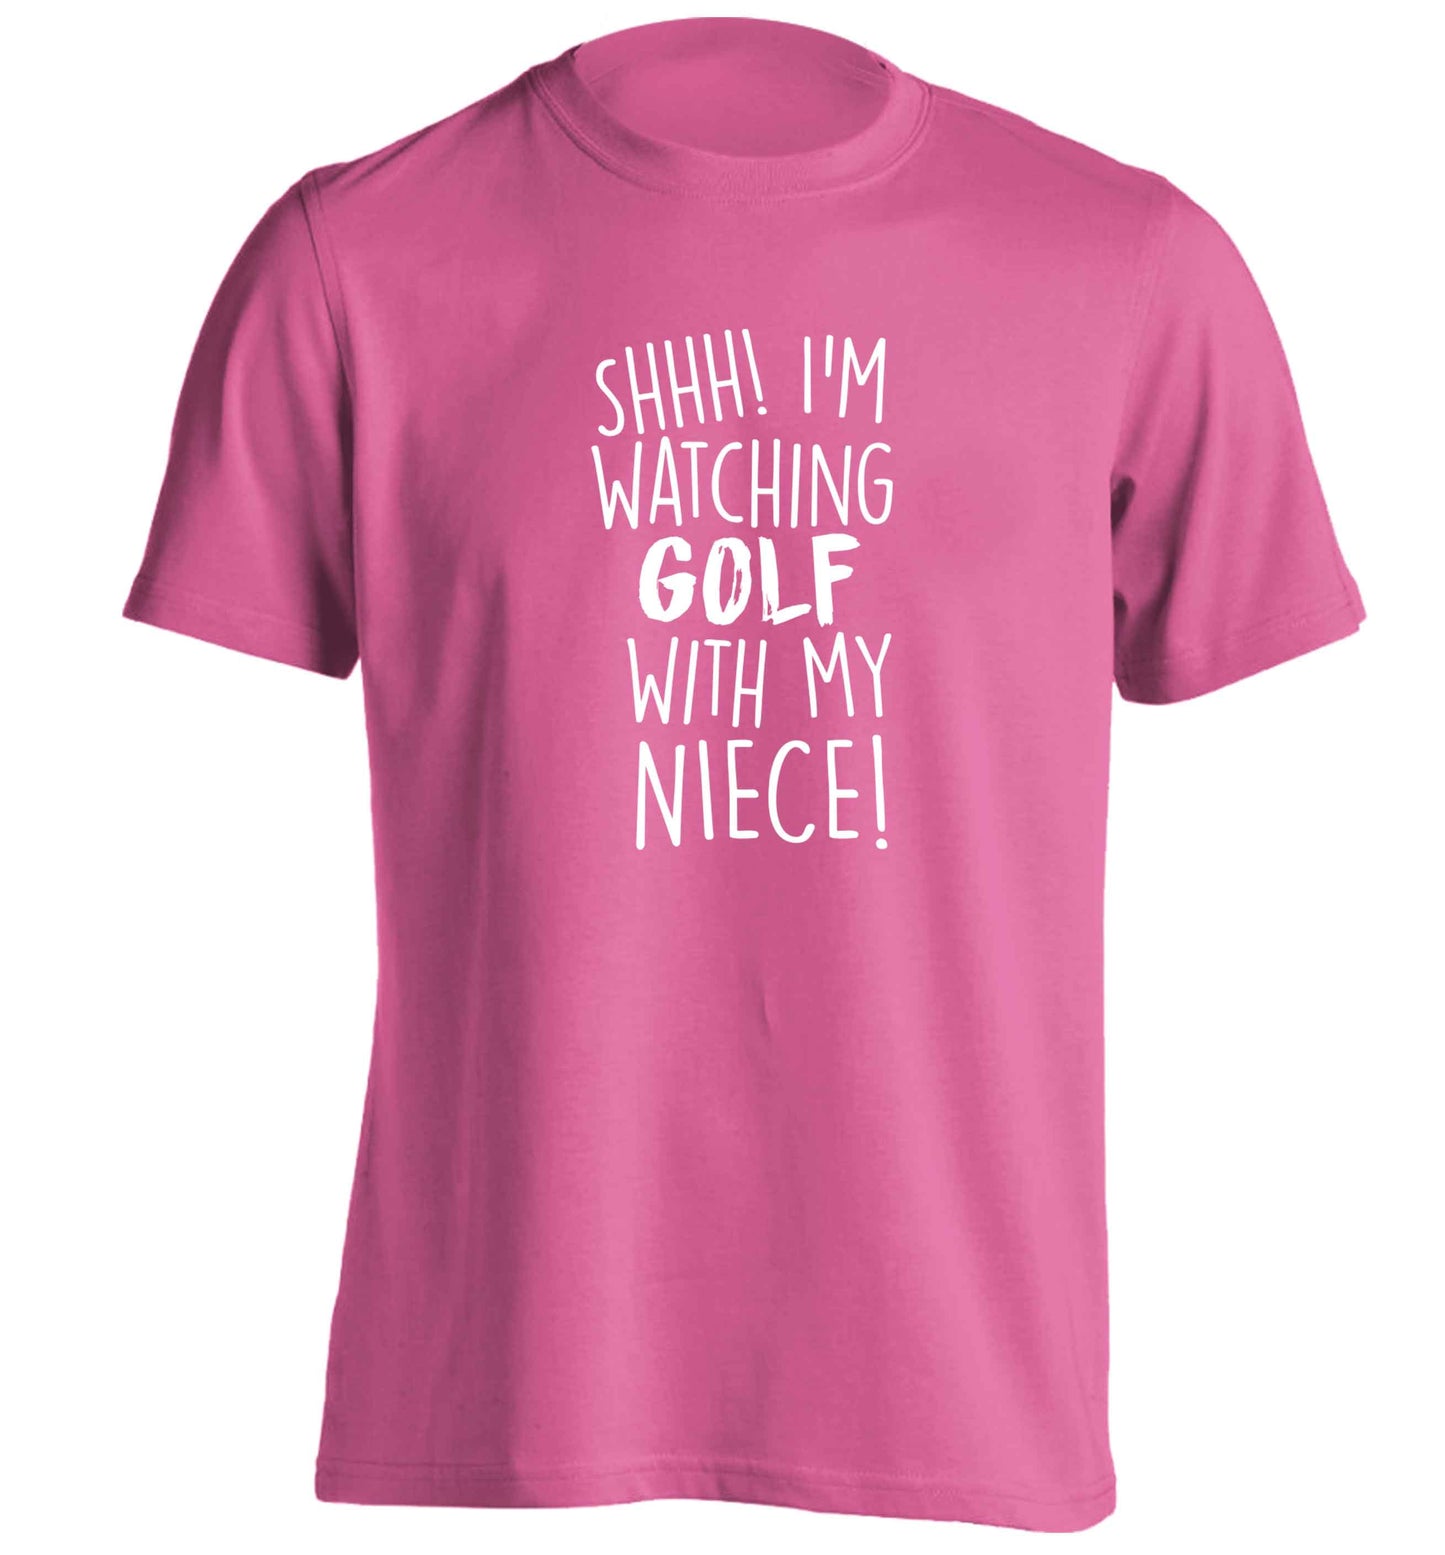 Shh I'm watching golf with my niece adults unisex pink Tshirt 2XL